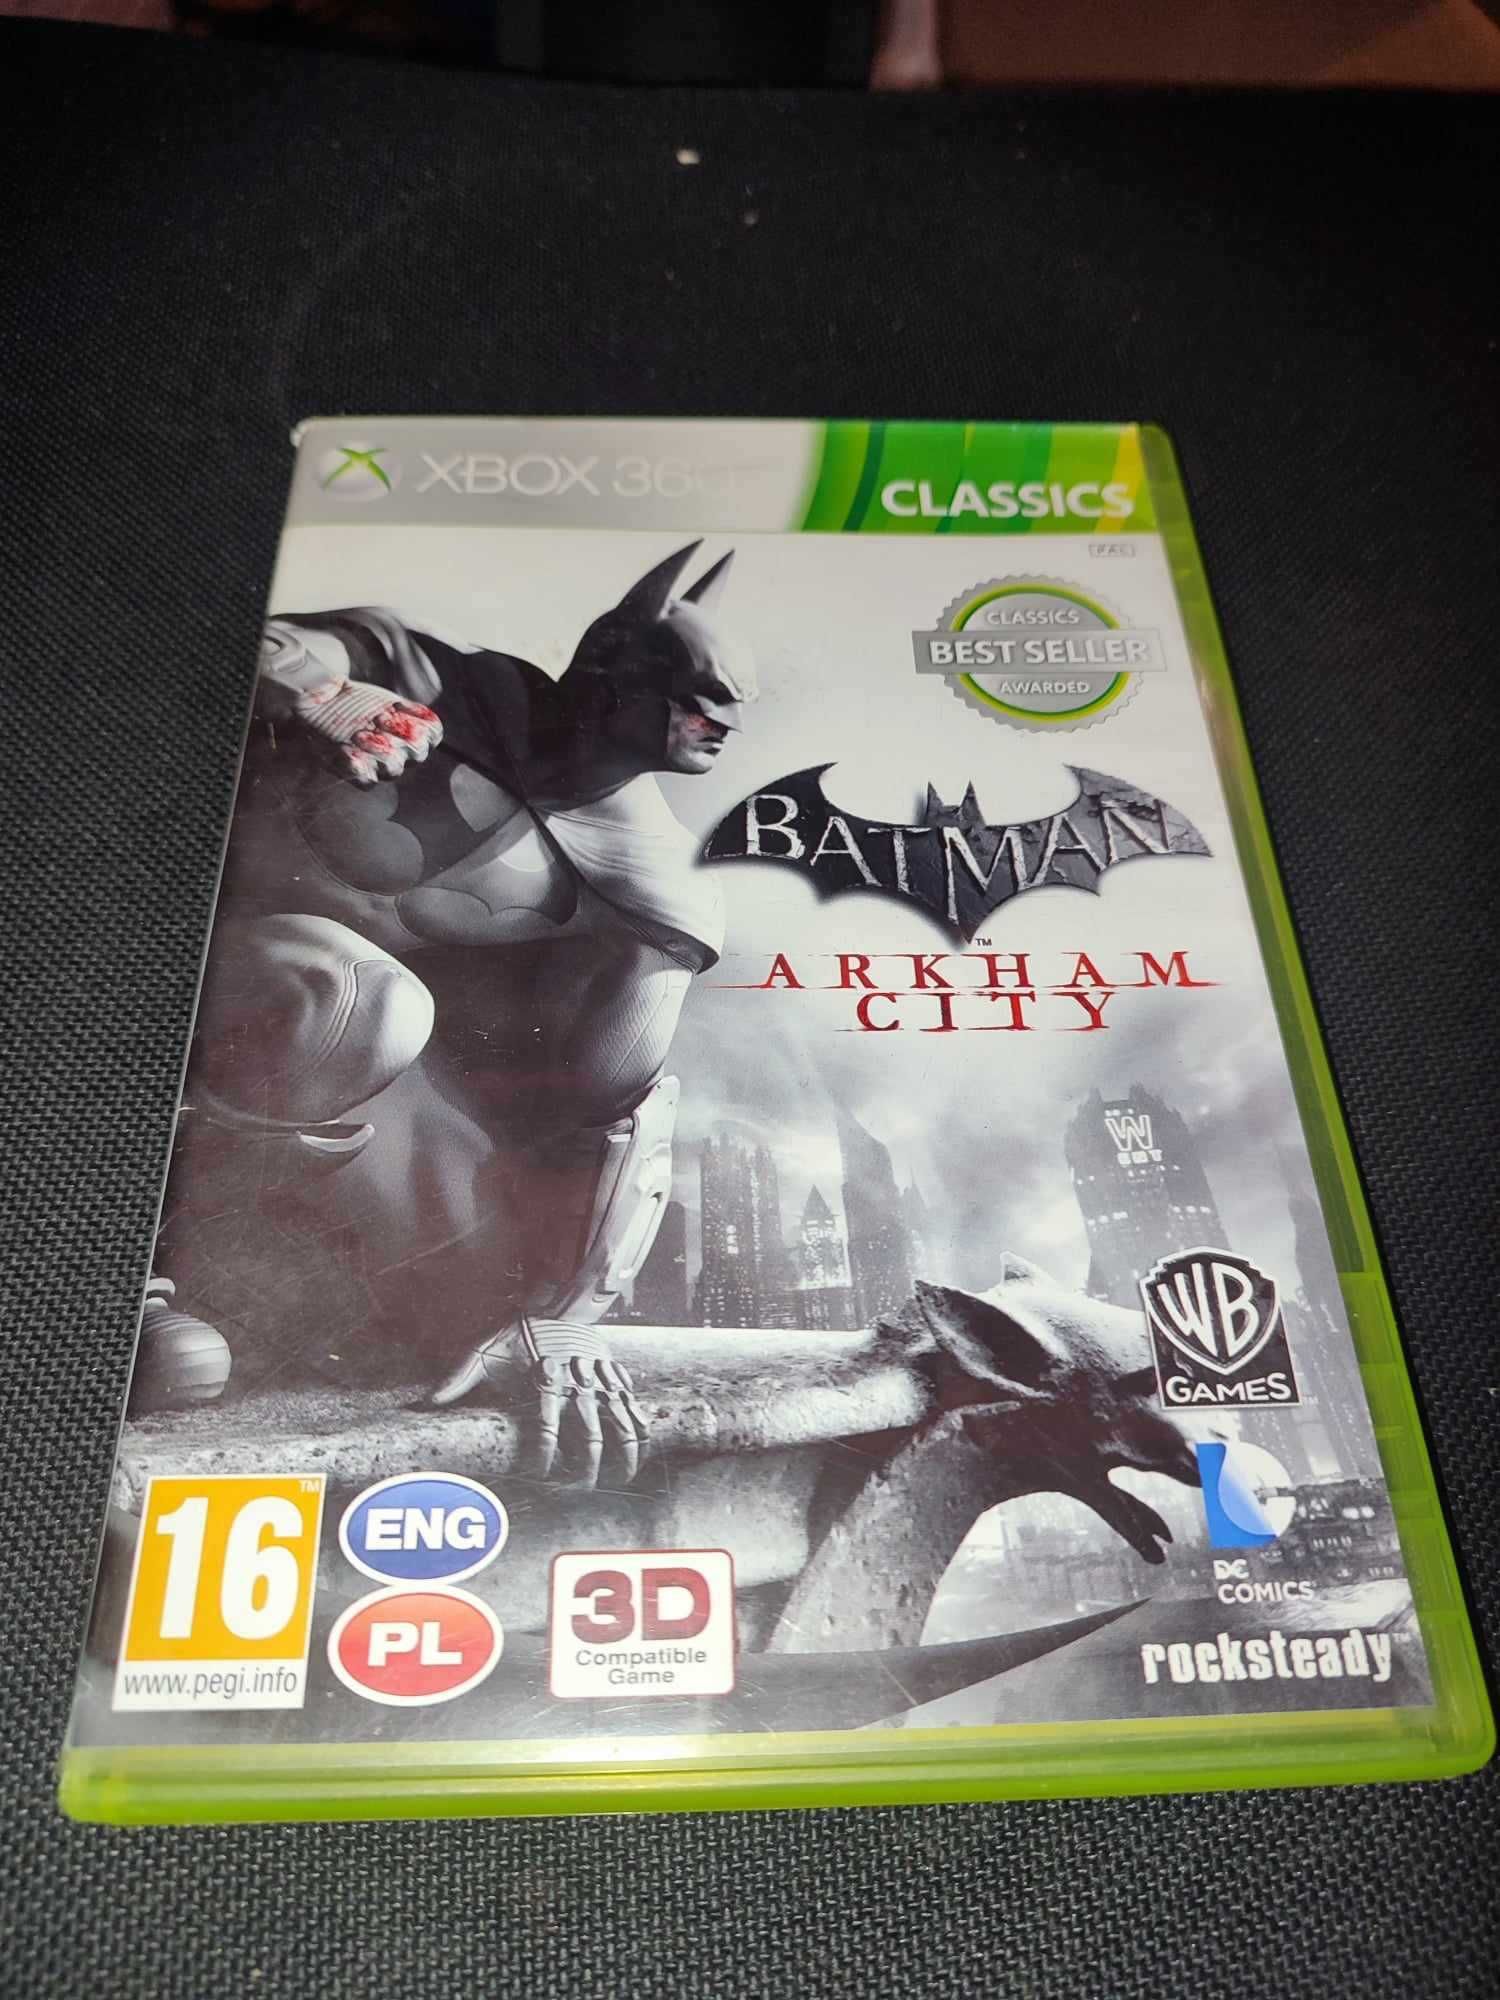 Okazja!!! Gra Batman na Xbox 360 !!! Polecam!